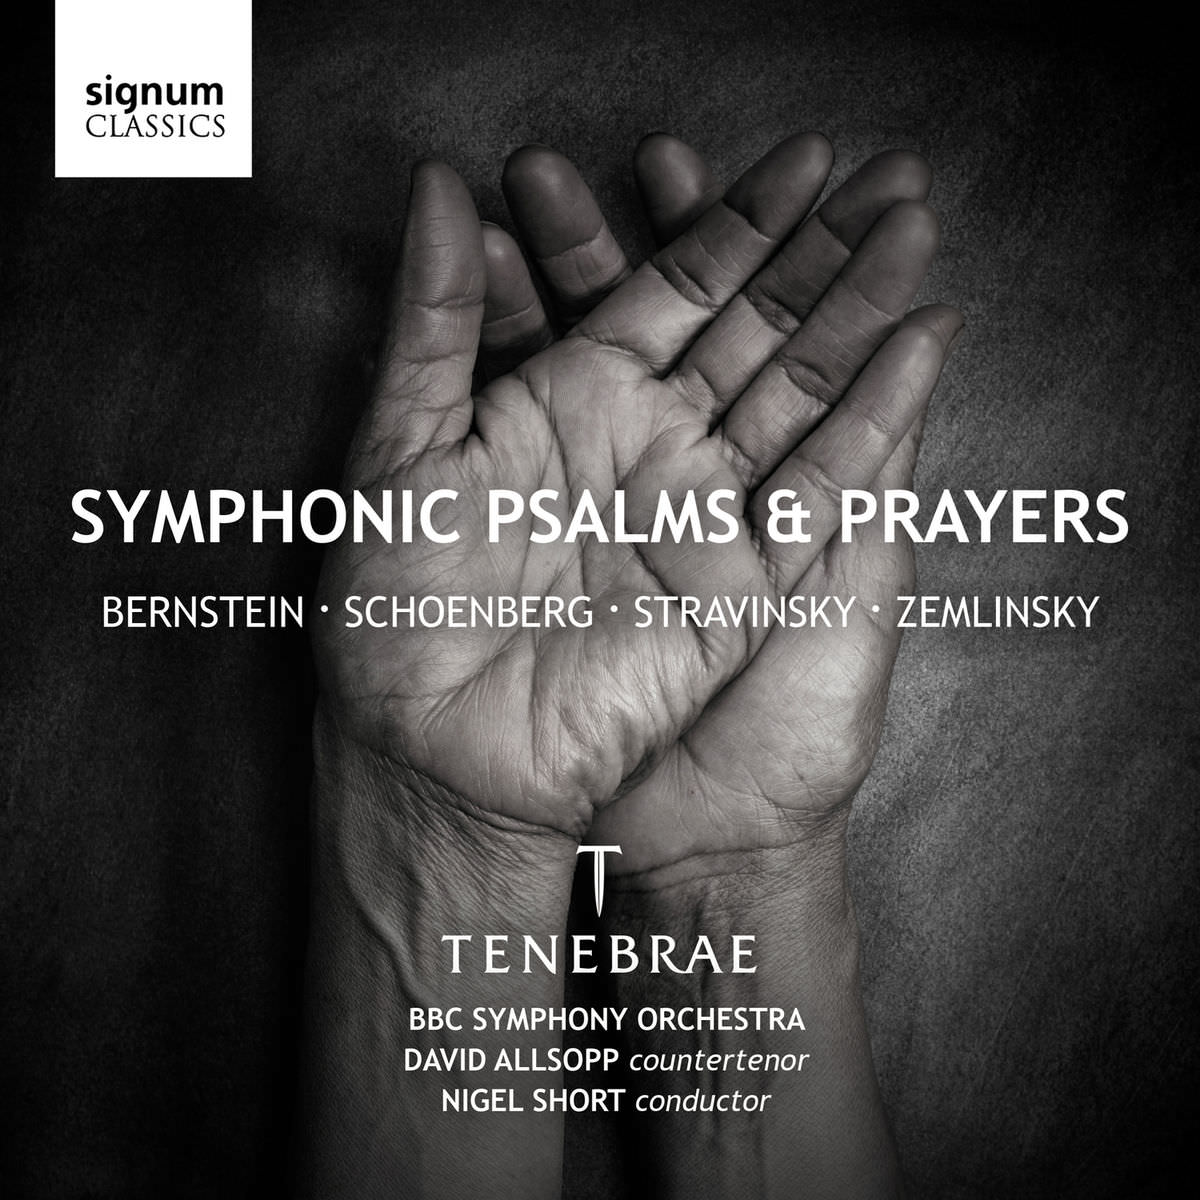 Tenebrae, BBC Symphony Orchestra & Nigel Short – Symphonic Psalms & Prayers (2018) [FLAC 24bit/96kHz]